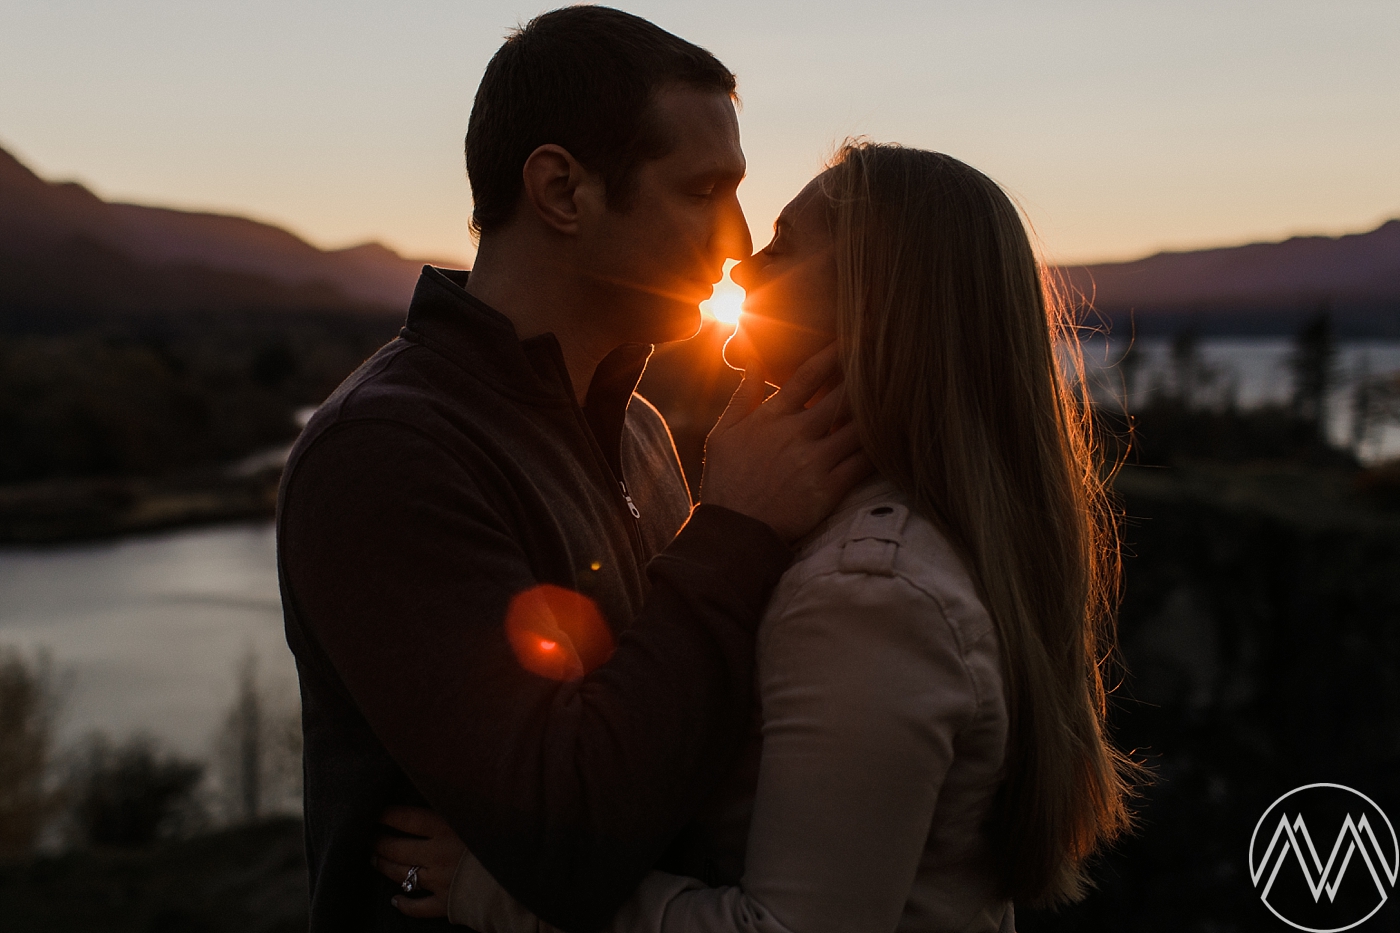 Sunset engagement photoshoot at the Columbia River Gorge with Portland Wedding Photographer, Megan Montalvo Photography. 